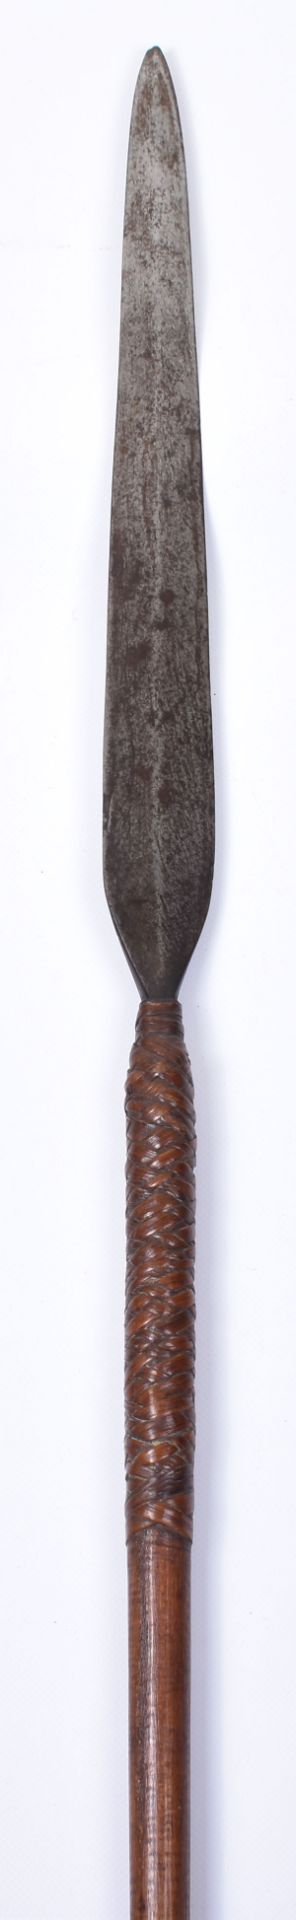 Large Early Zulu Warriors Spear “Assegai” - Image 5 of 10